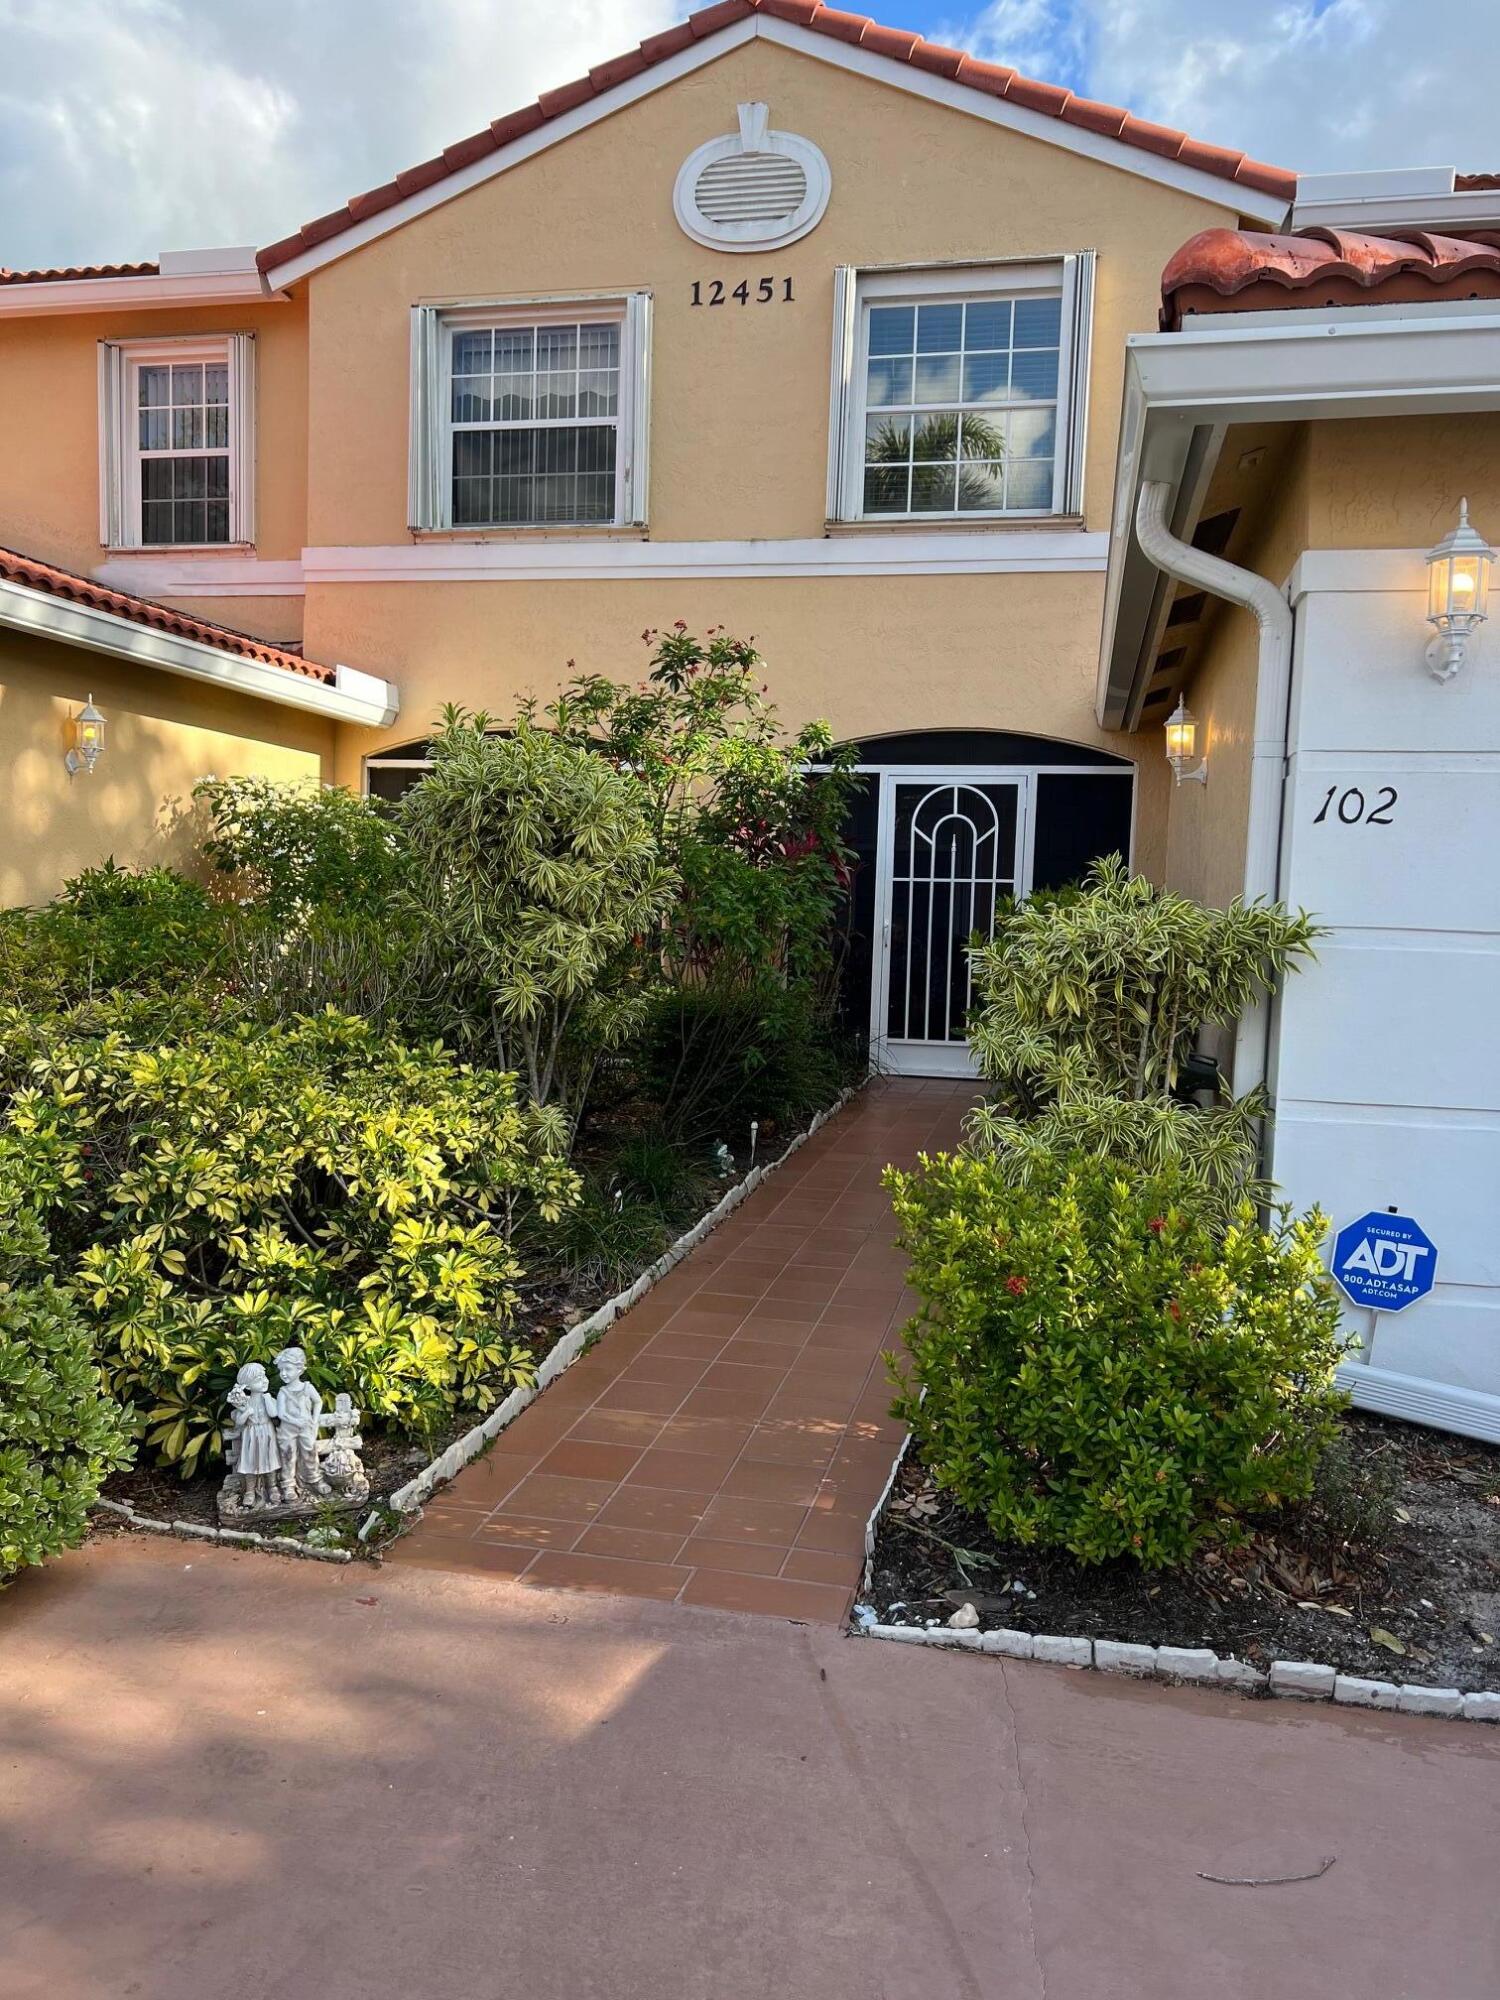 Property for Sale at 12451 Crystal Pointe Drive 102, Boynton Beach, Palm Beach County, Florida - Bedrooms: 3 
Bathrooms: 2  - $349,000